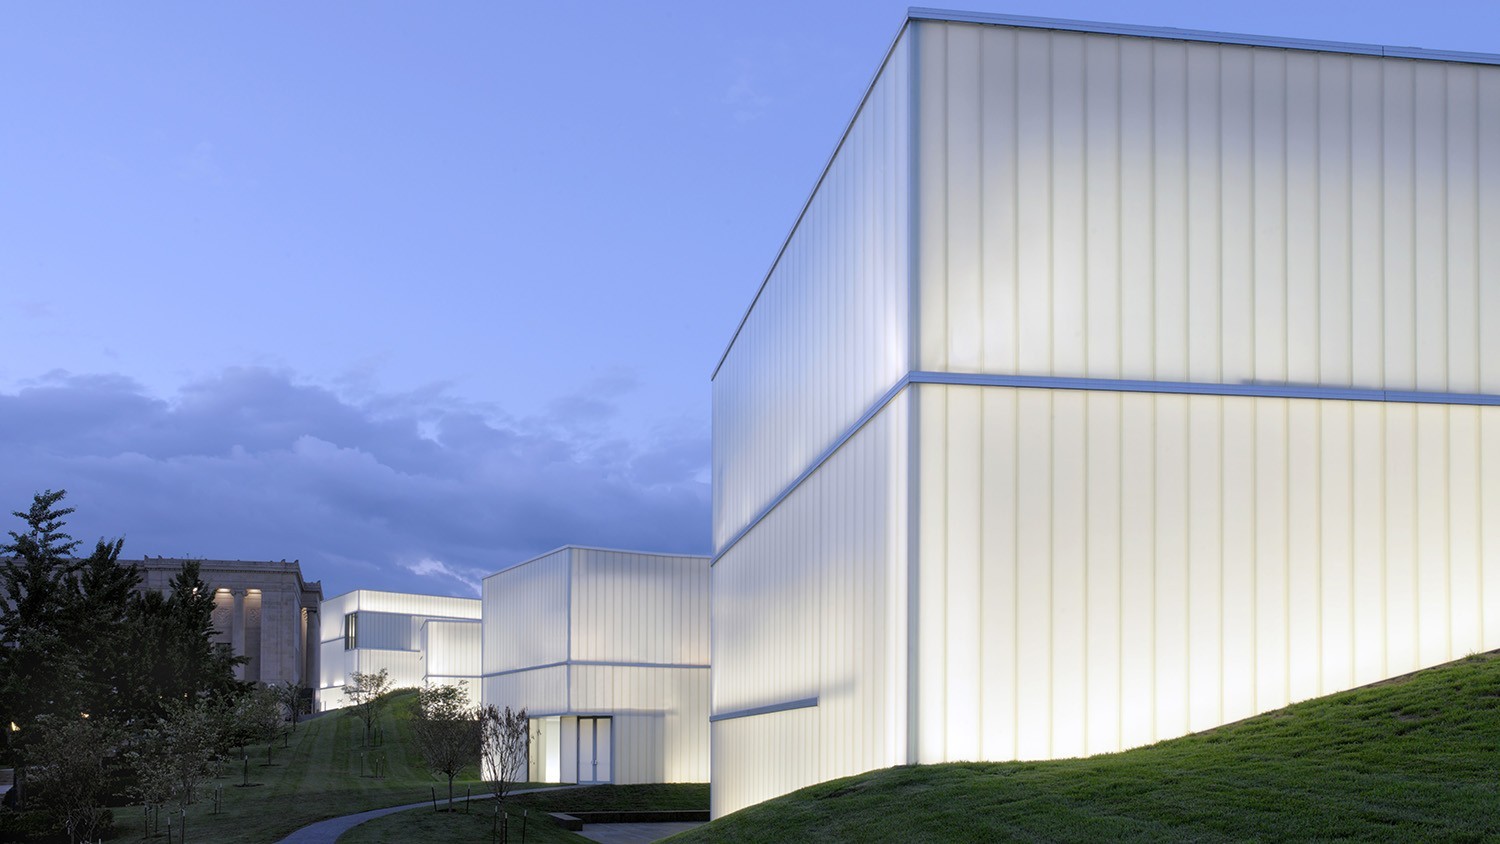 Arquitectura de luz difusa: de qué manera diseñar 'edificios linterna' con muros de vidrio auto-portantes